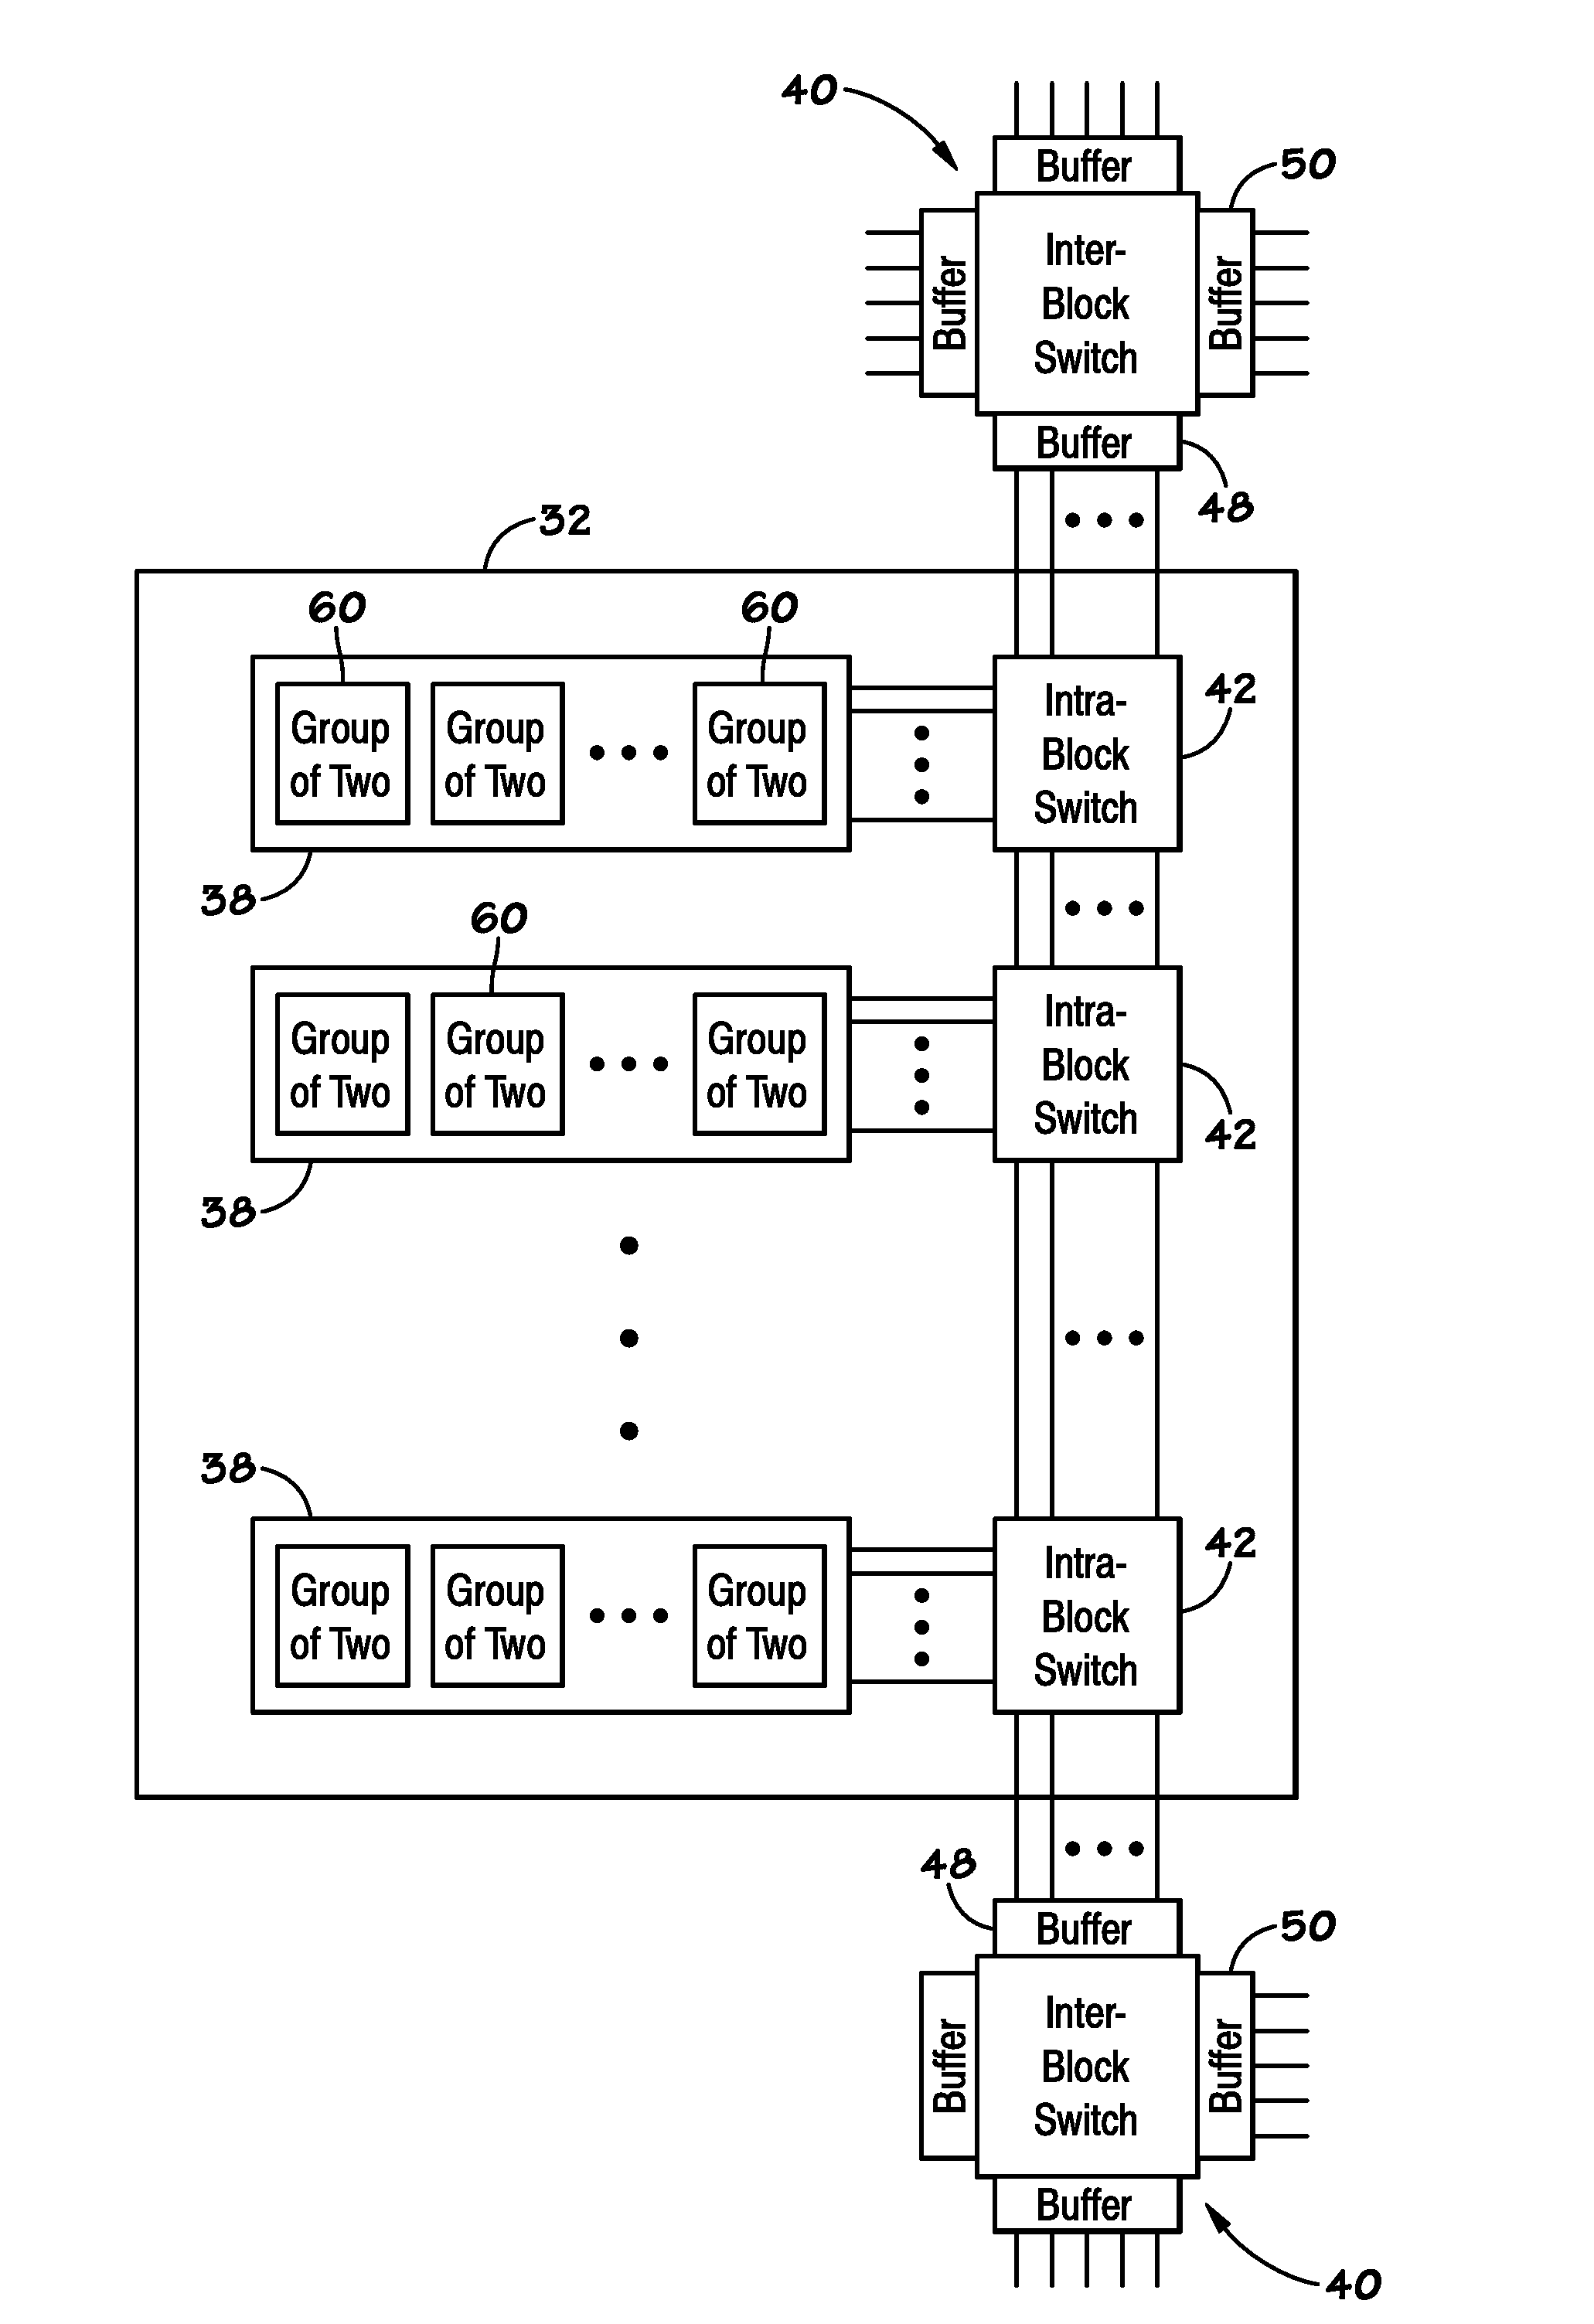 Counter operation in a state machine lattice